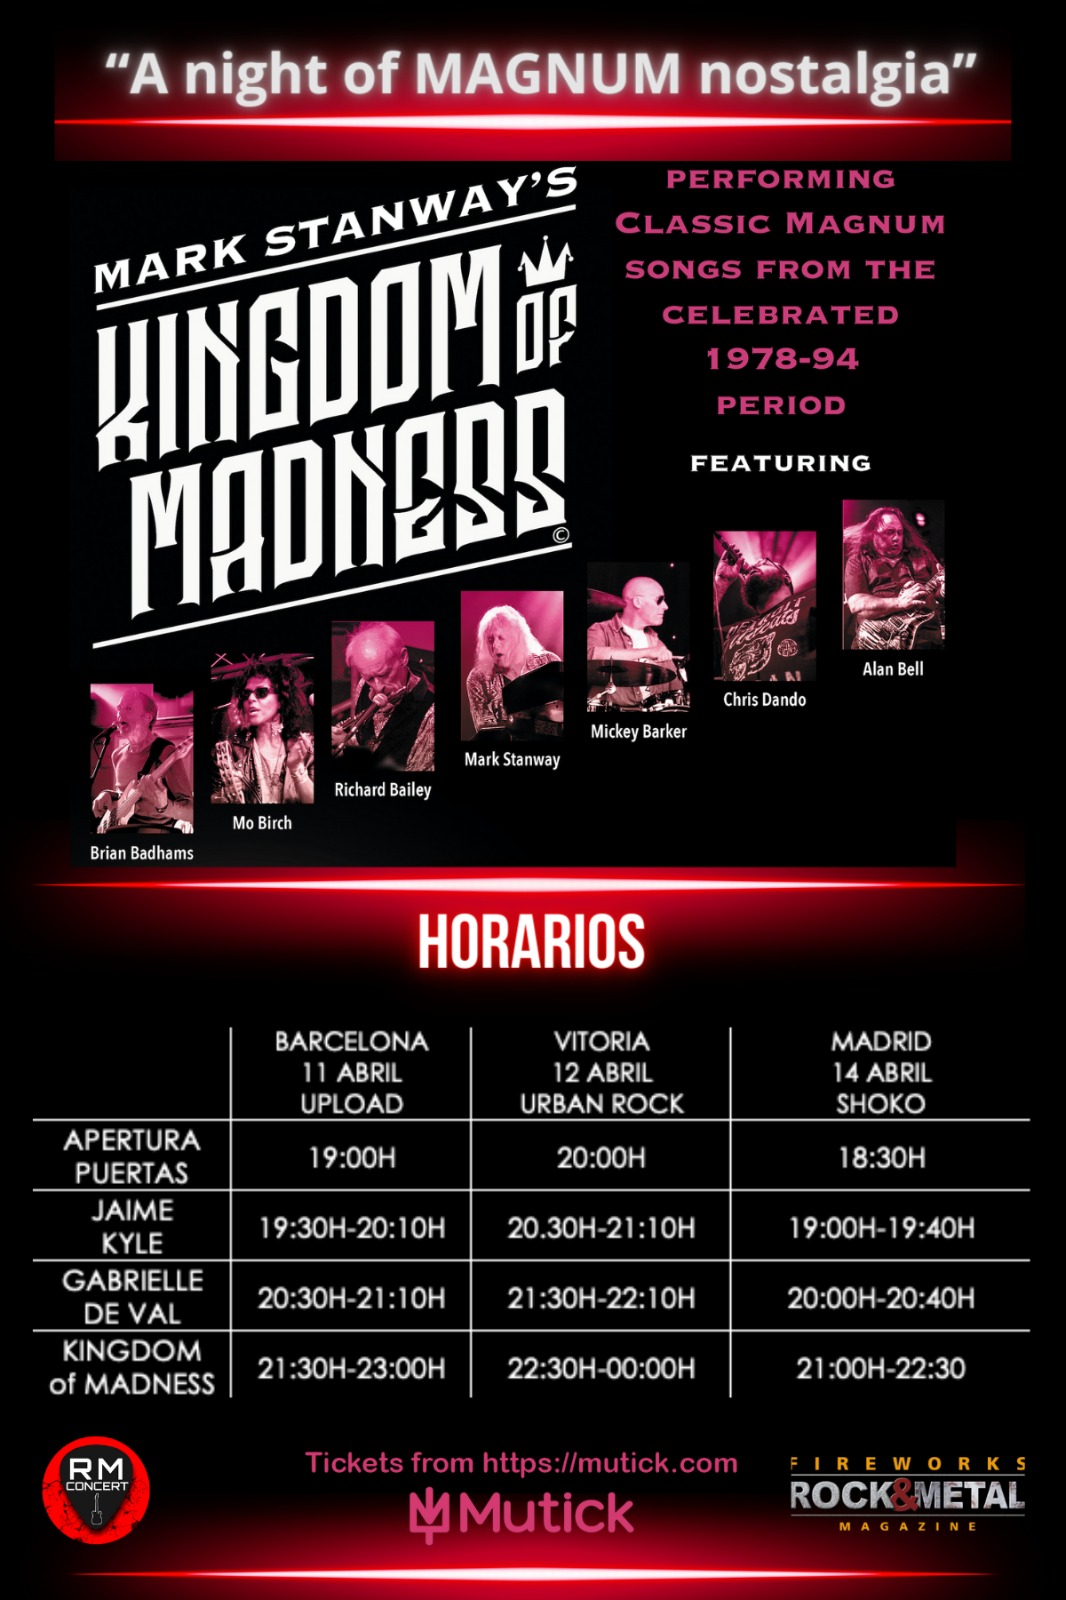 KINGDOM of MADNESS performing Magnum en Madrid   - Mutick